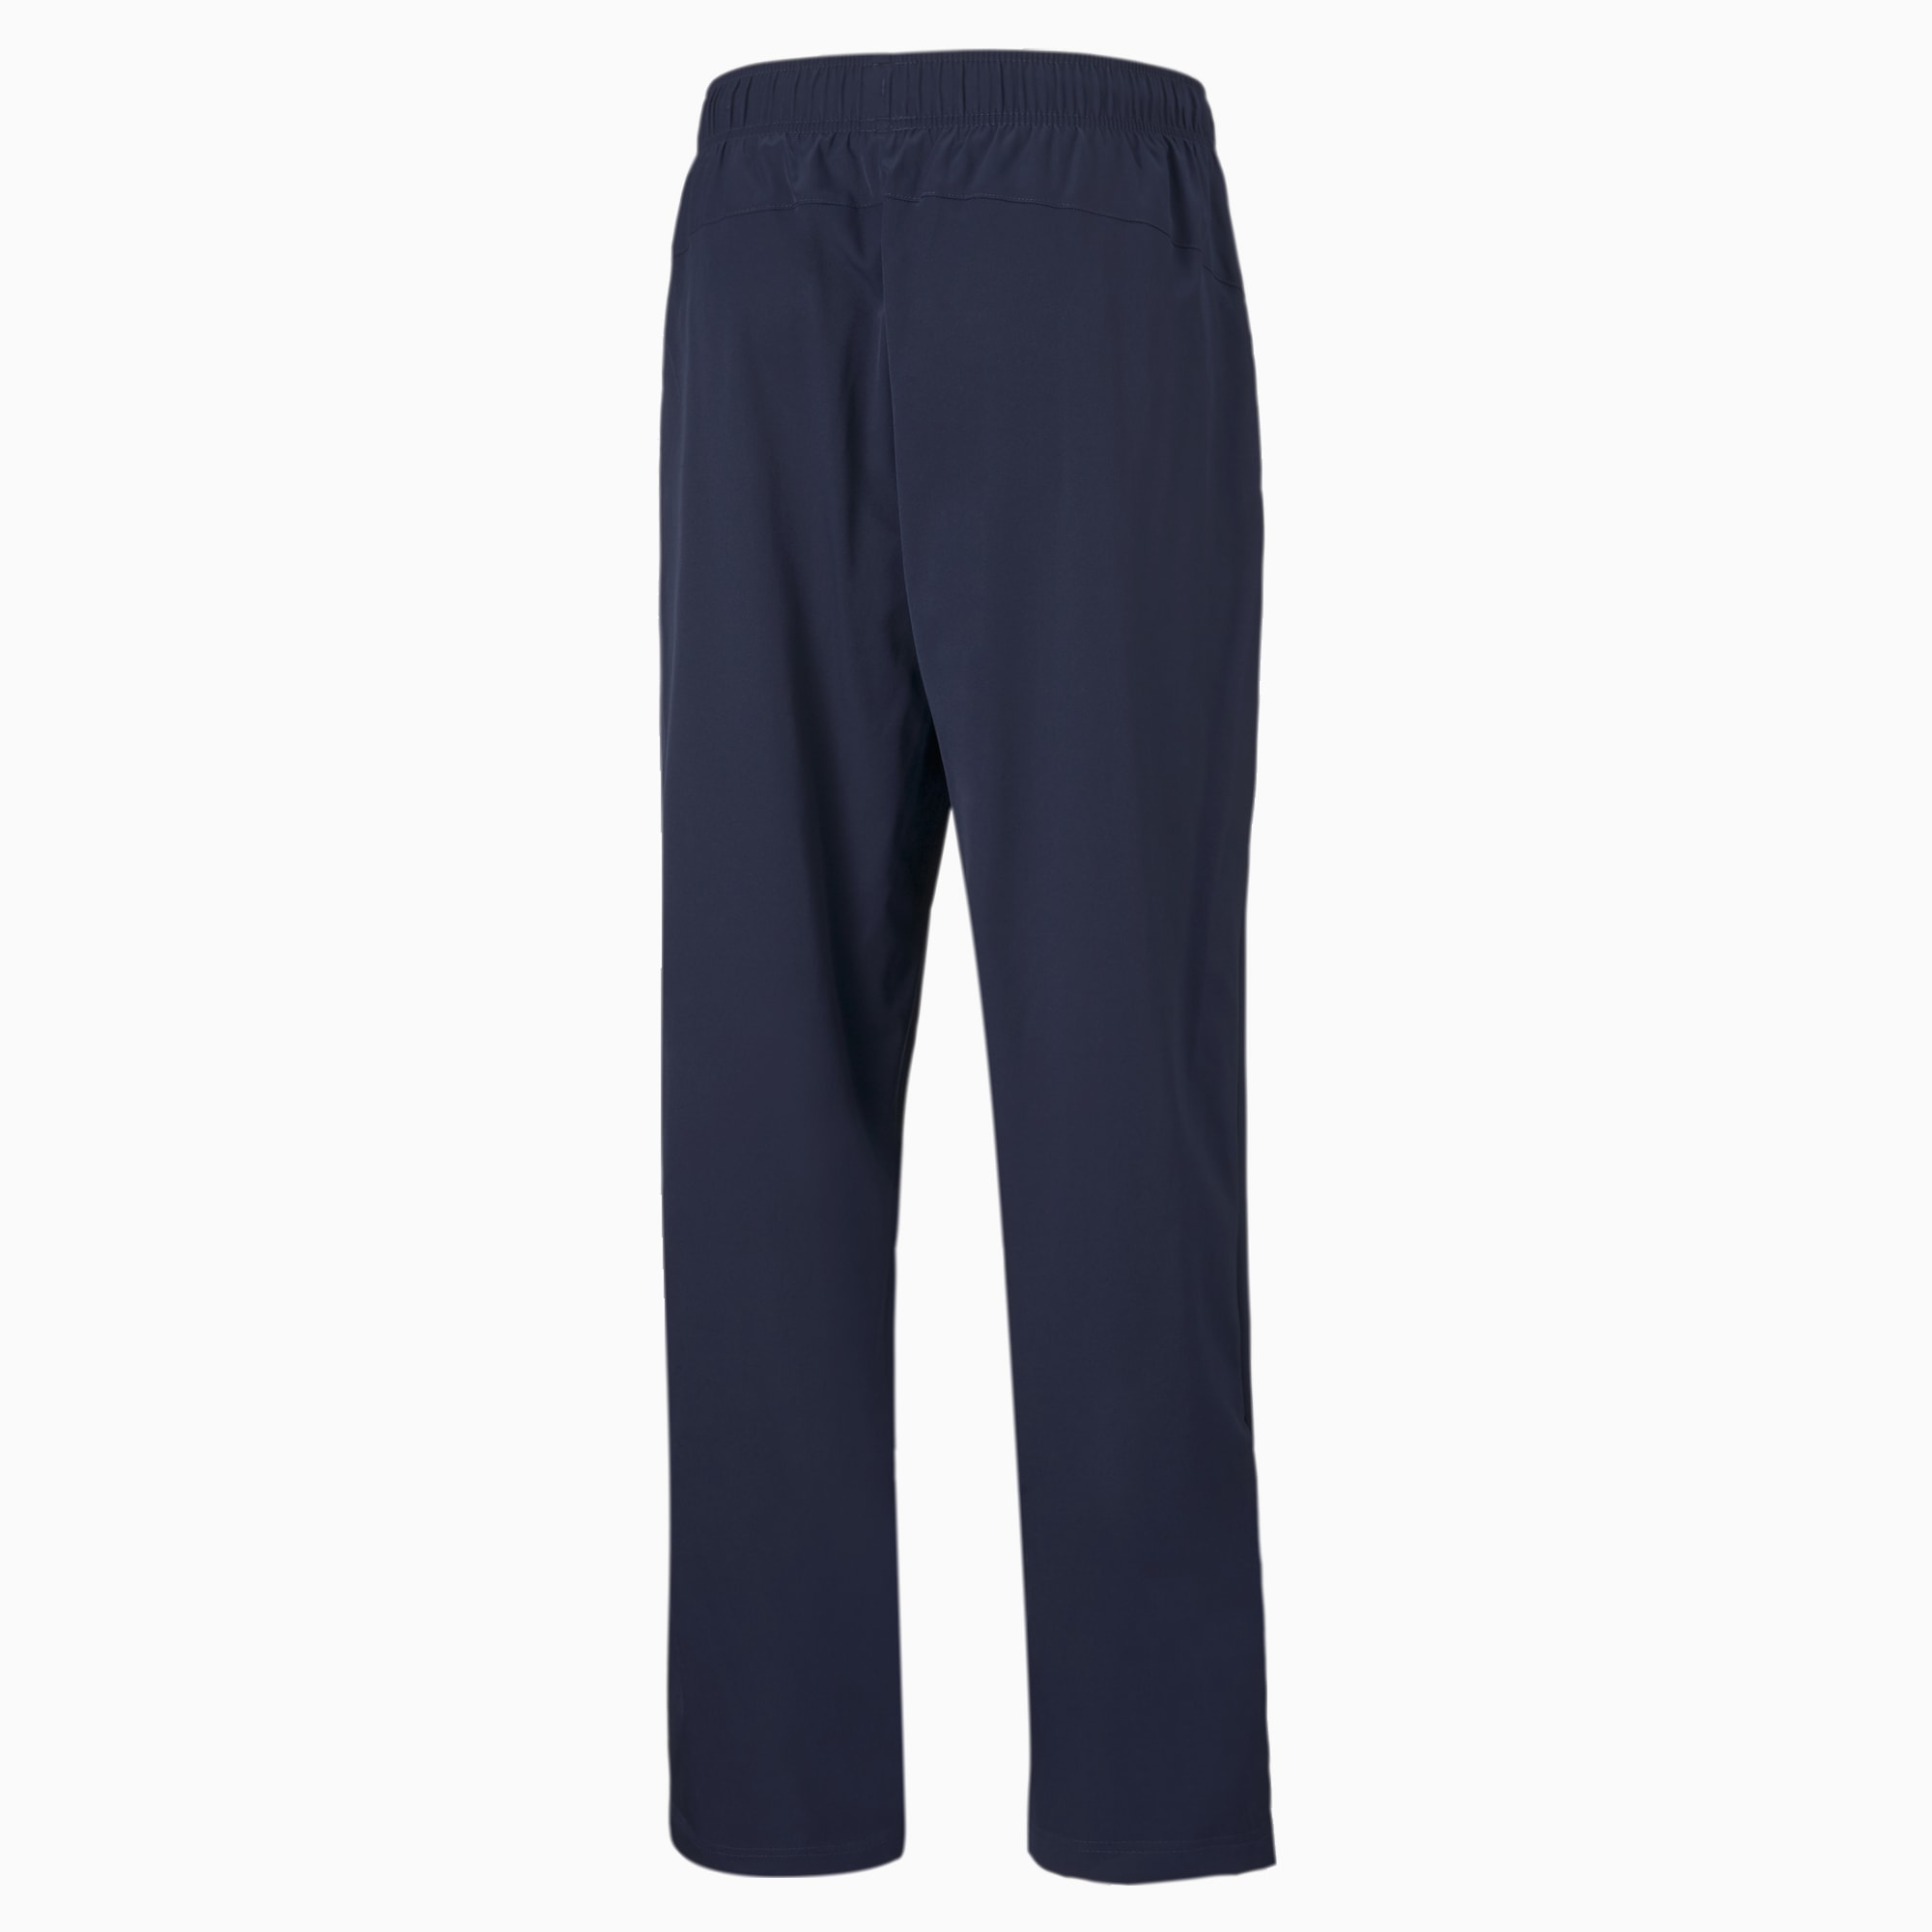 PUMA Active Woven Men's Sweatpants, Peacoat, Size XL/S, Clothing